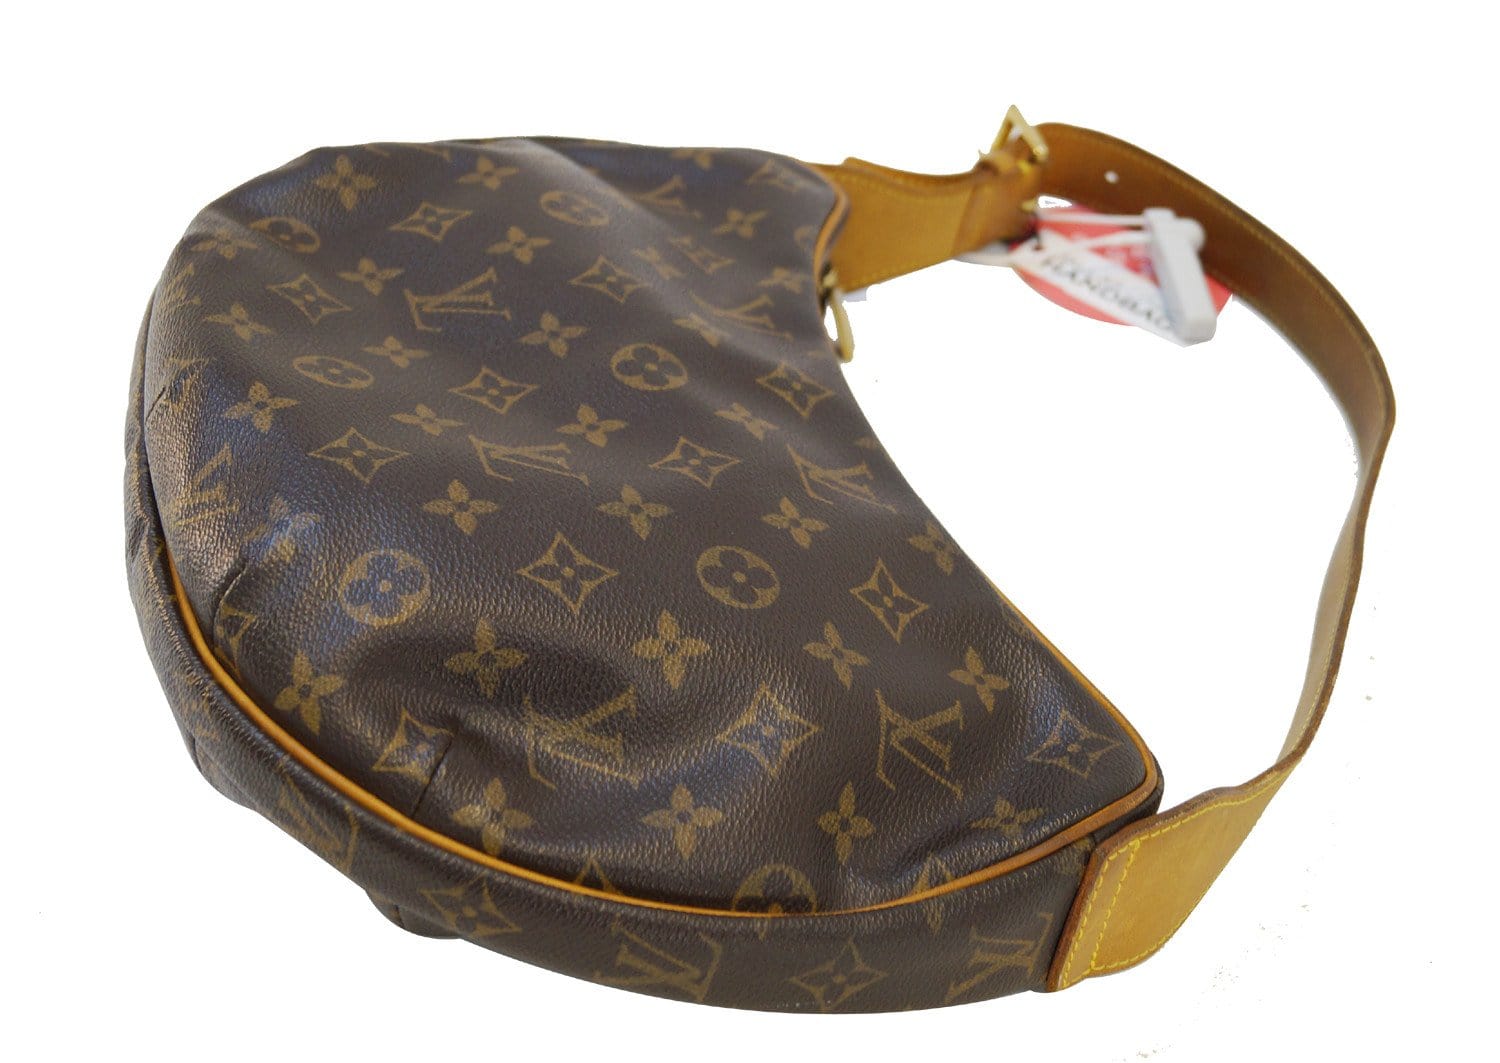 ➳❥ on X: Vintage LV monogram croissant bag 🥐